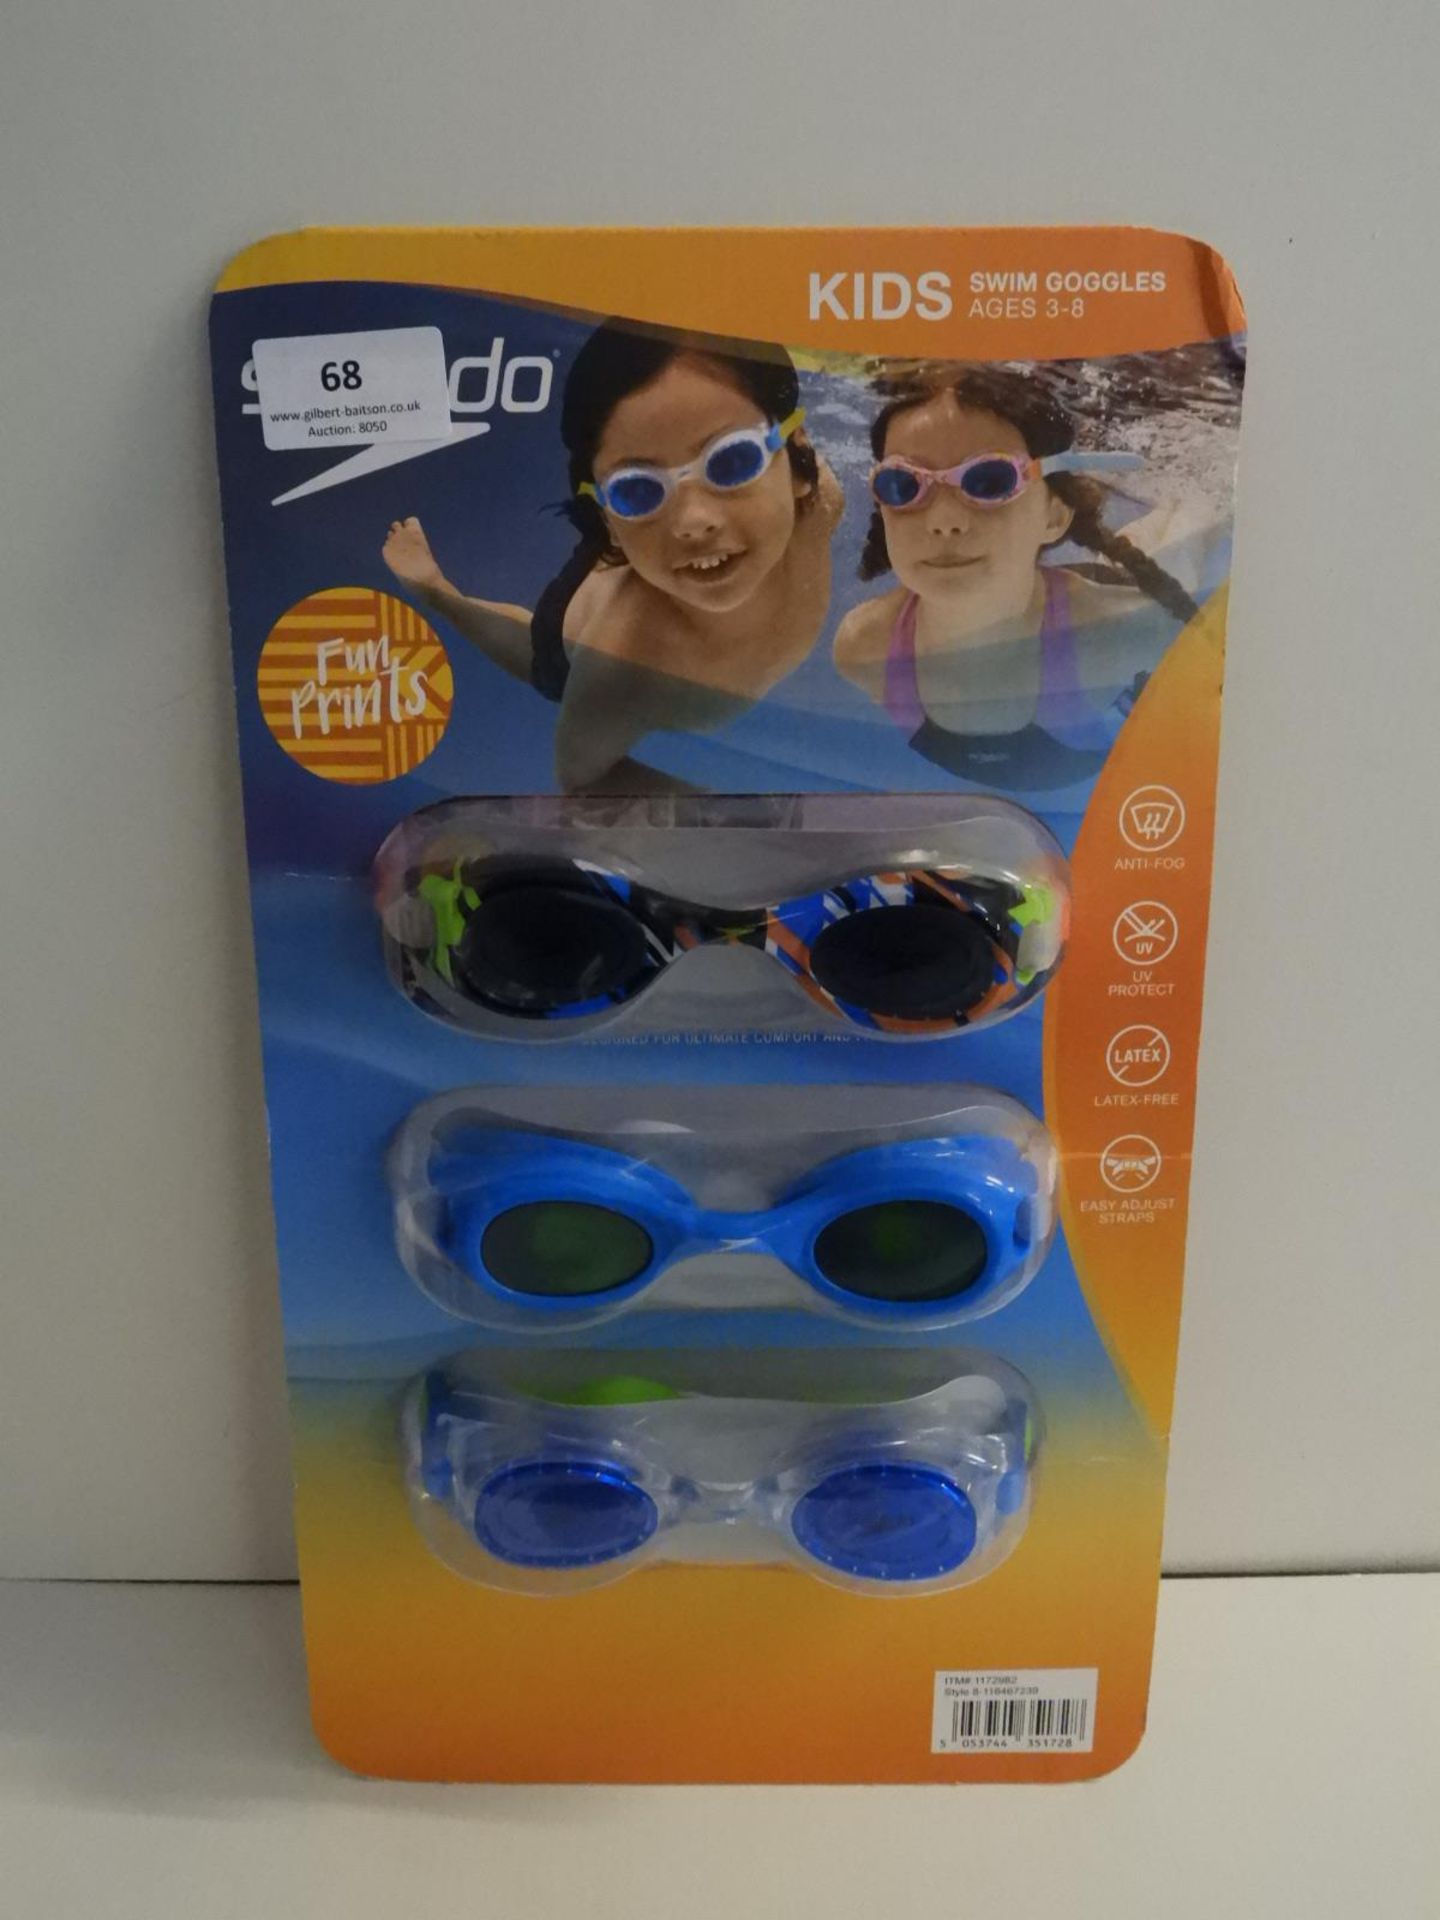 *Speedo Kids Goggles 3pc Set